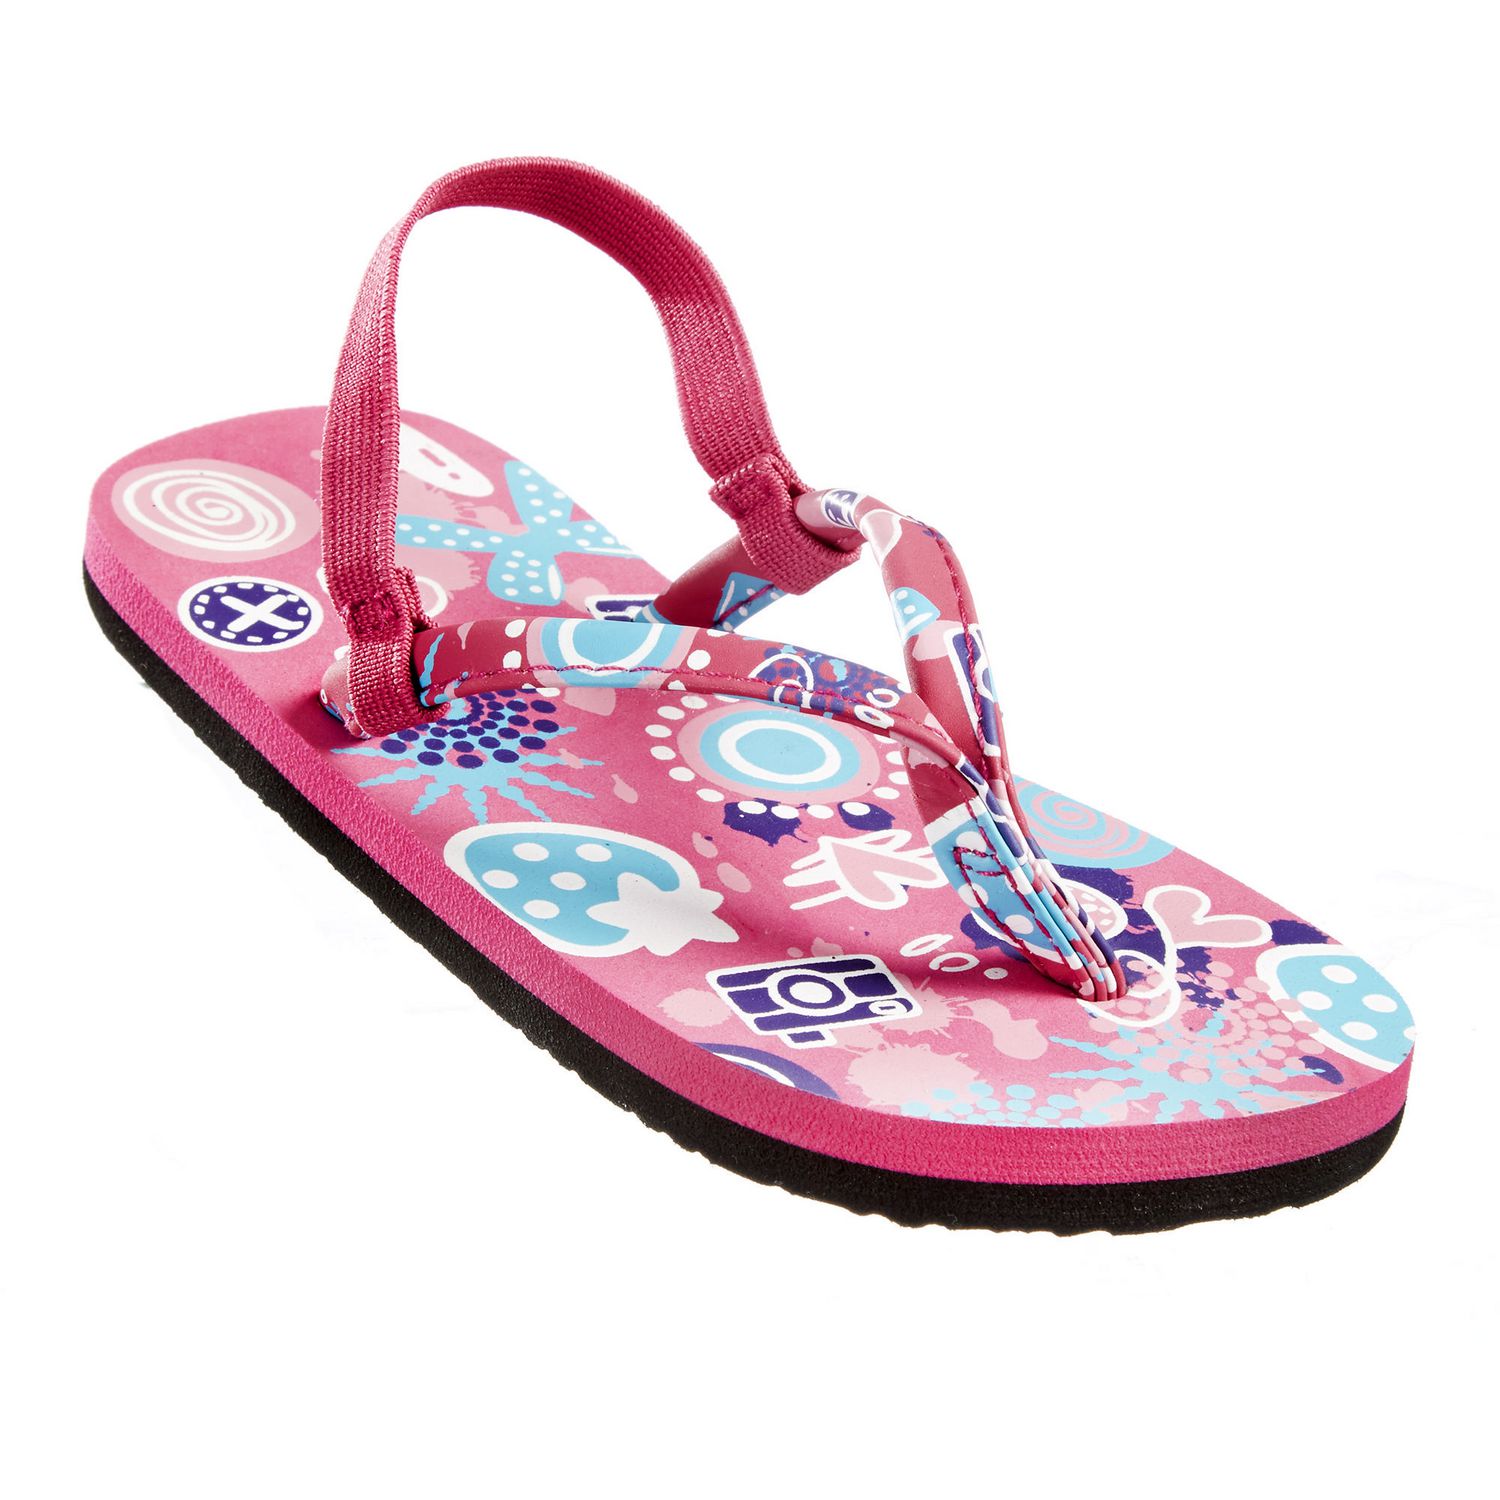 George Toddler Girls’ Floral Flip Flop | Walmart Canada